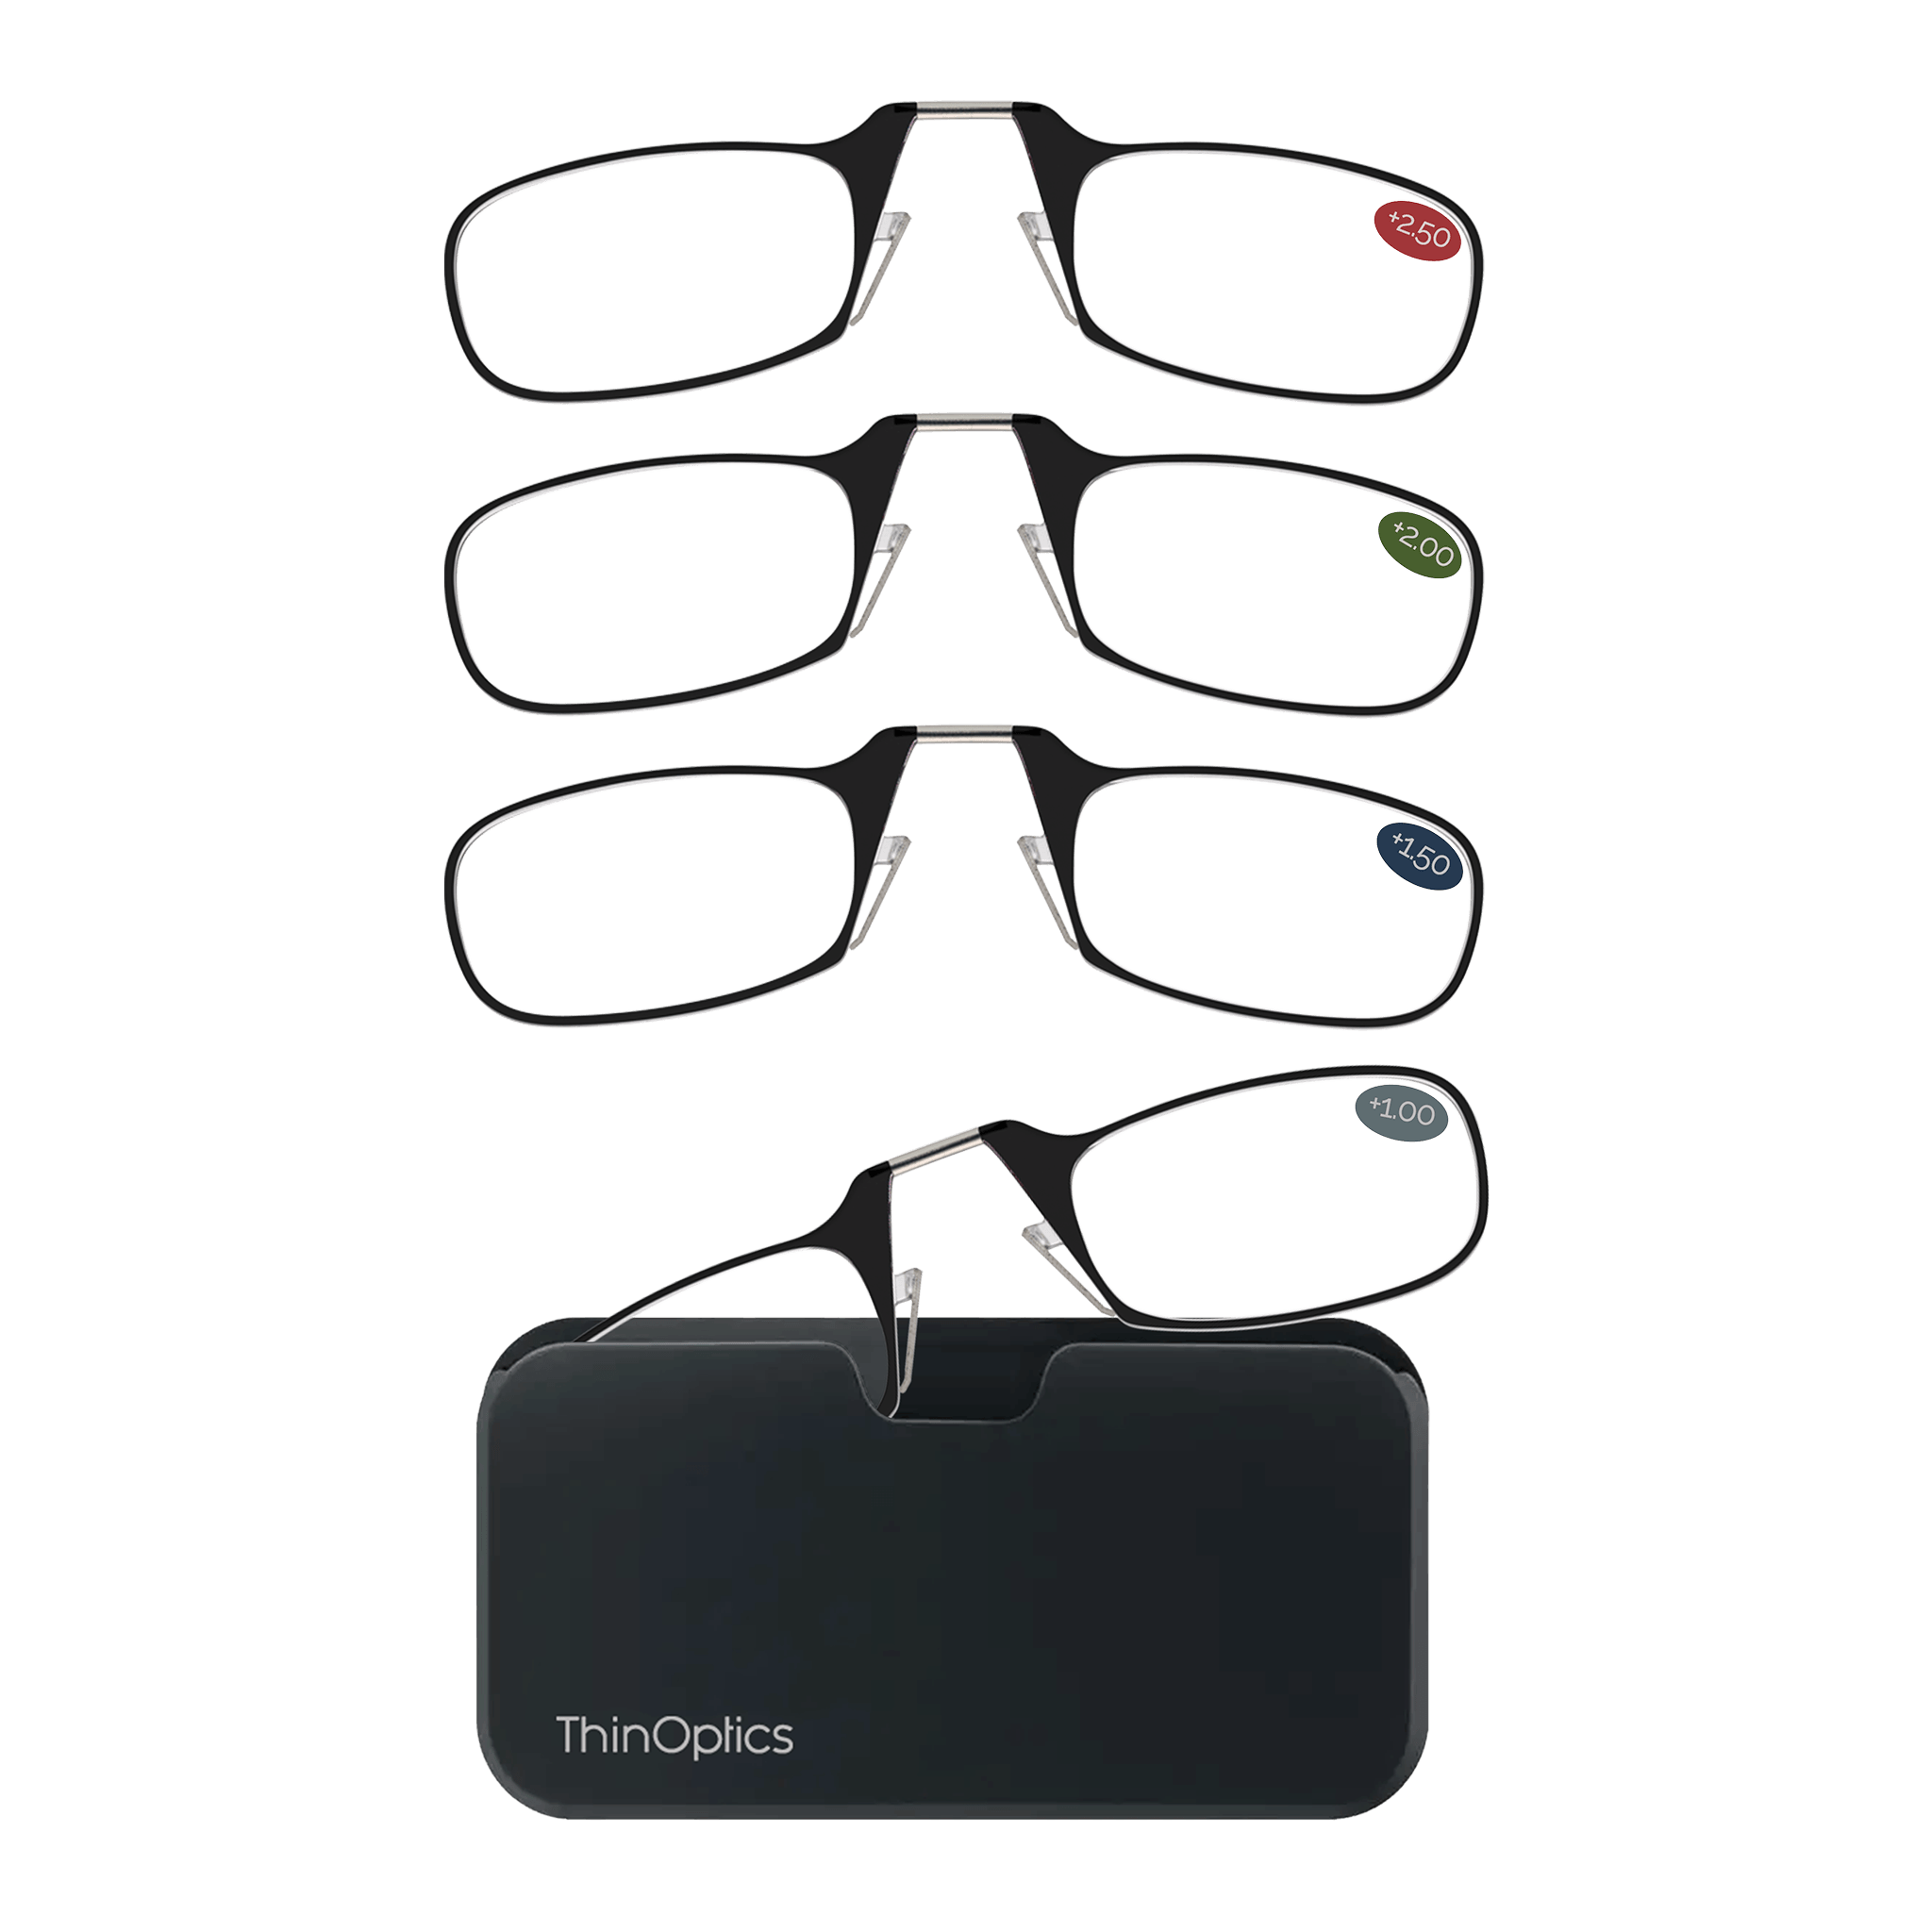 ThinOptics Keychain Case and Reading Glasses - Walmart.com